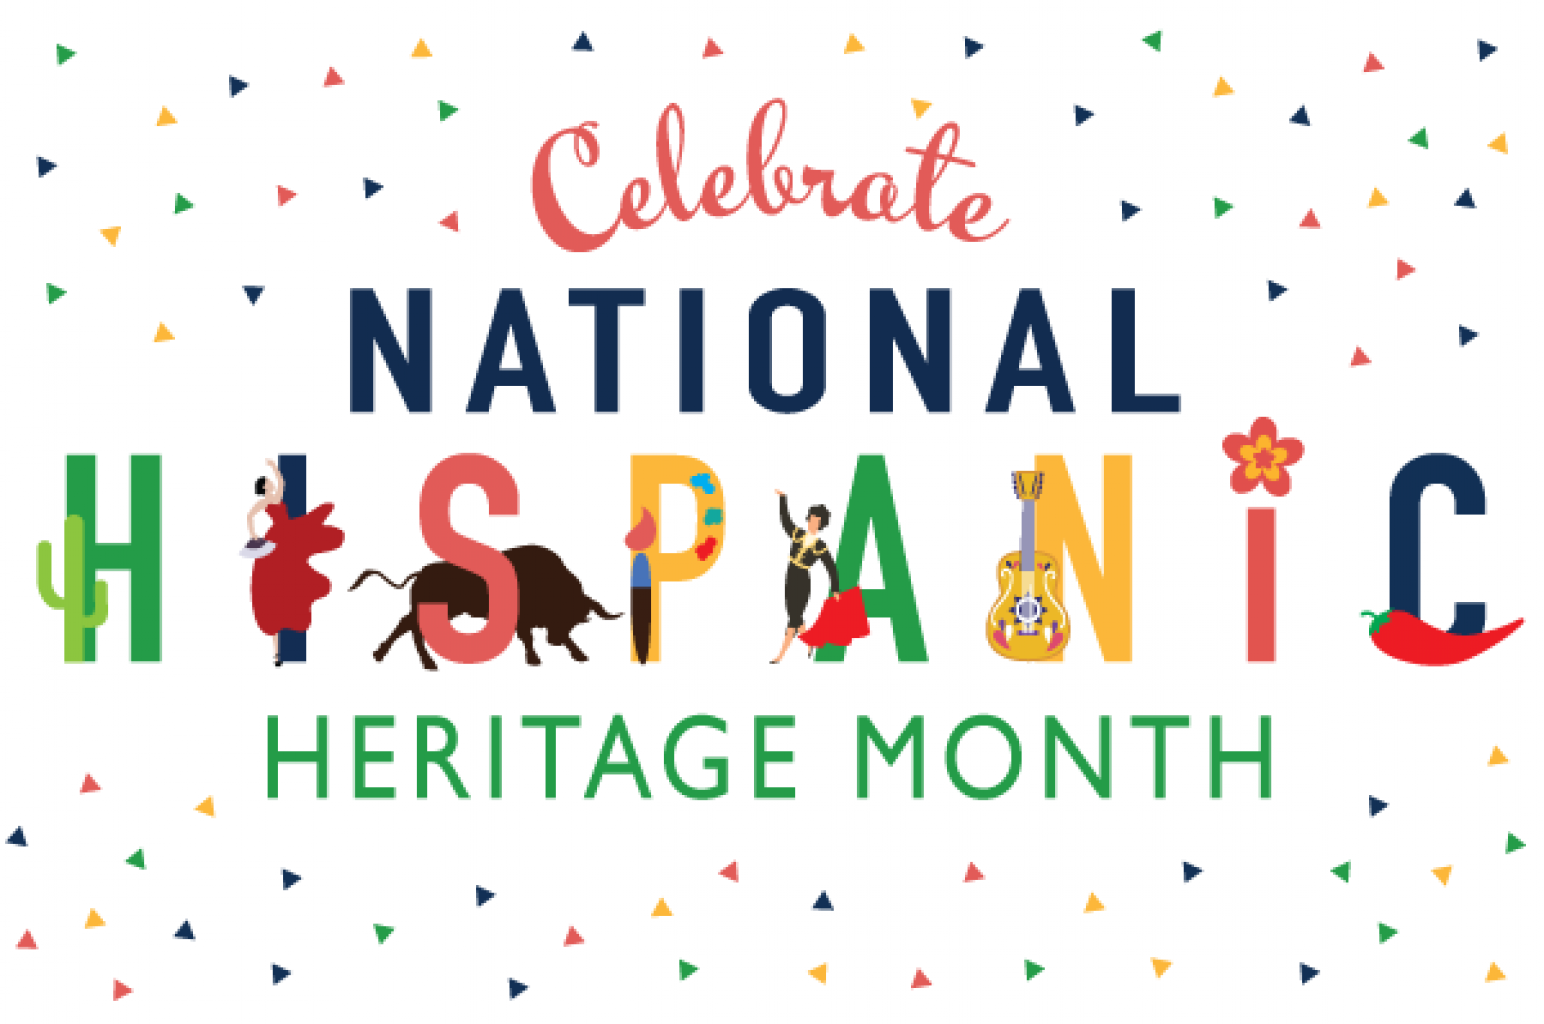 National Hispanic Heritage Month: Sept. 15-Oct. 15, 2020